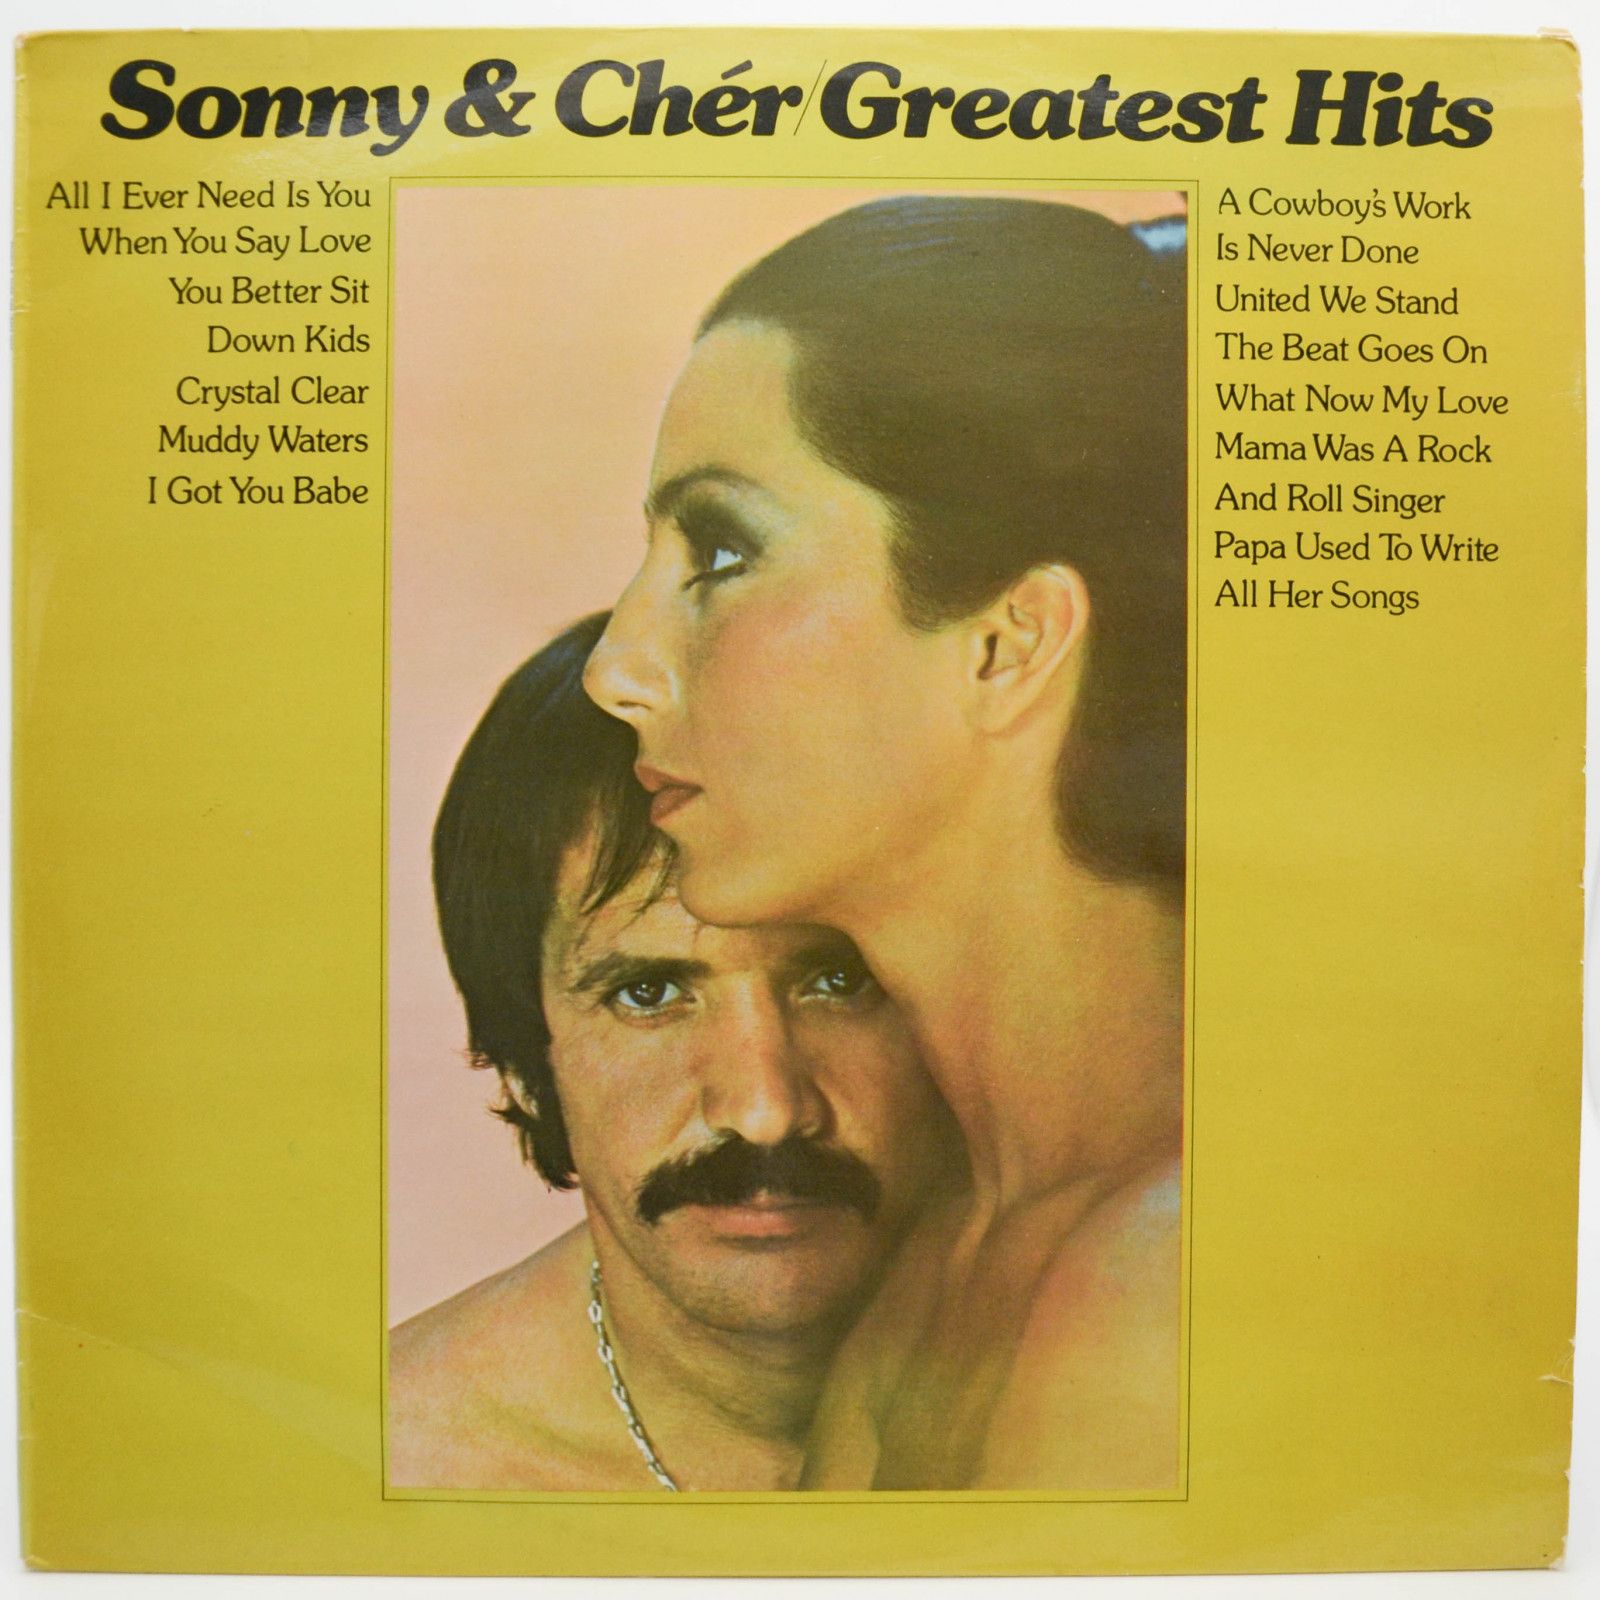 Sonny & Cher — Greatest Hits, 1974